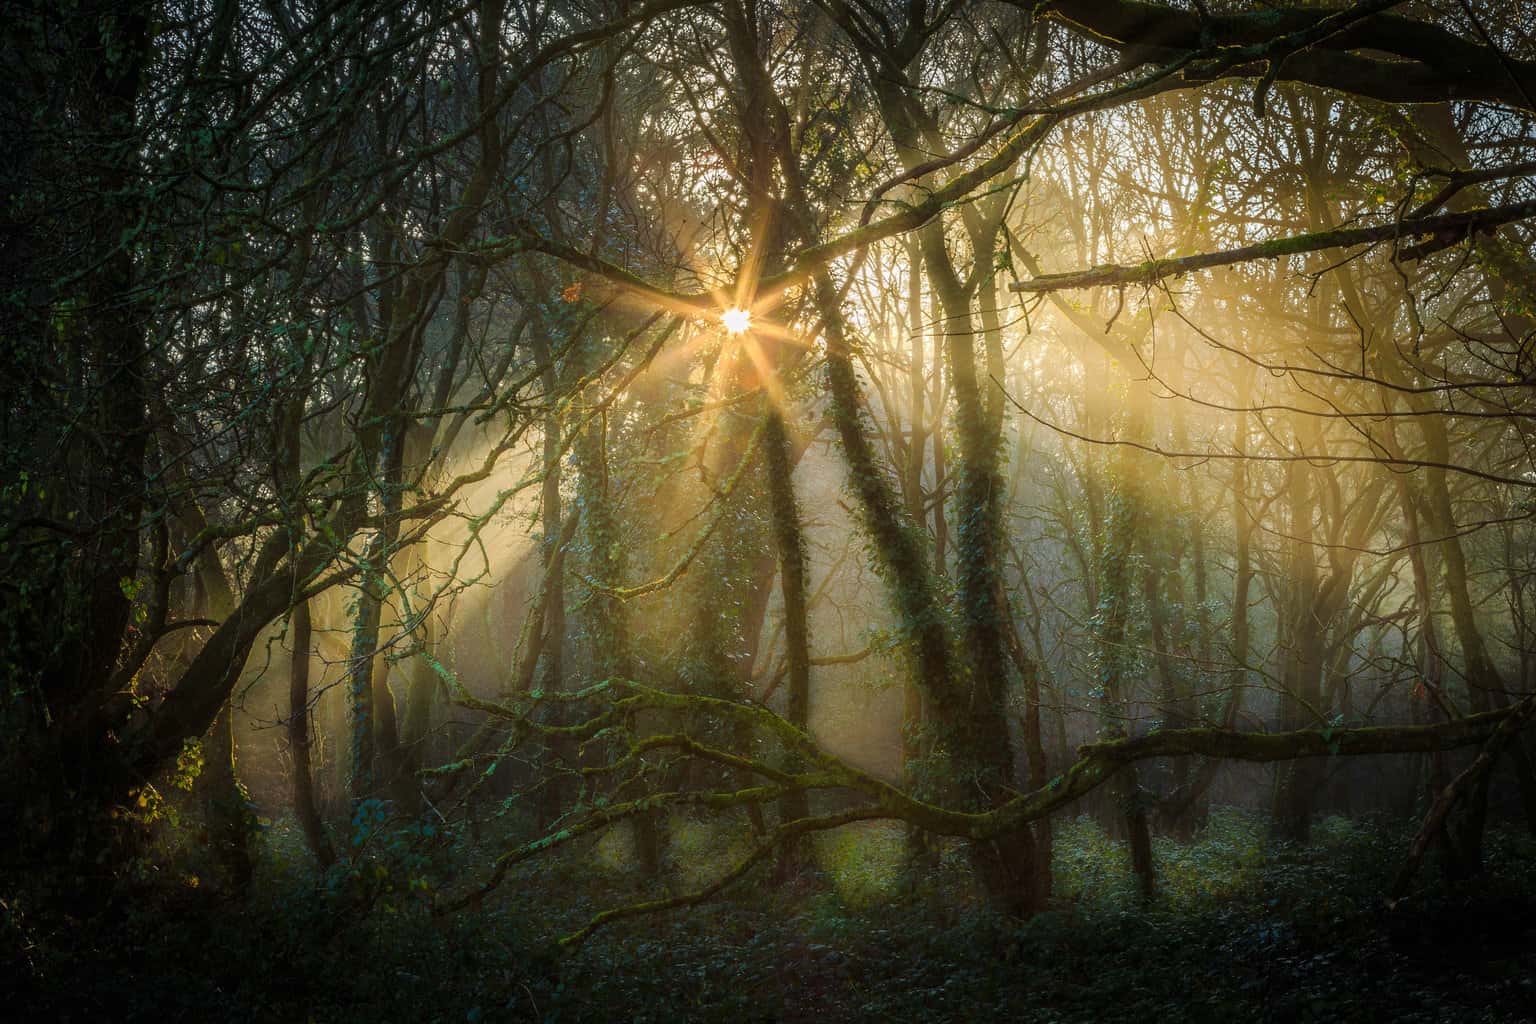  Delph Woods by Rick McEvoy Poole Photographer 